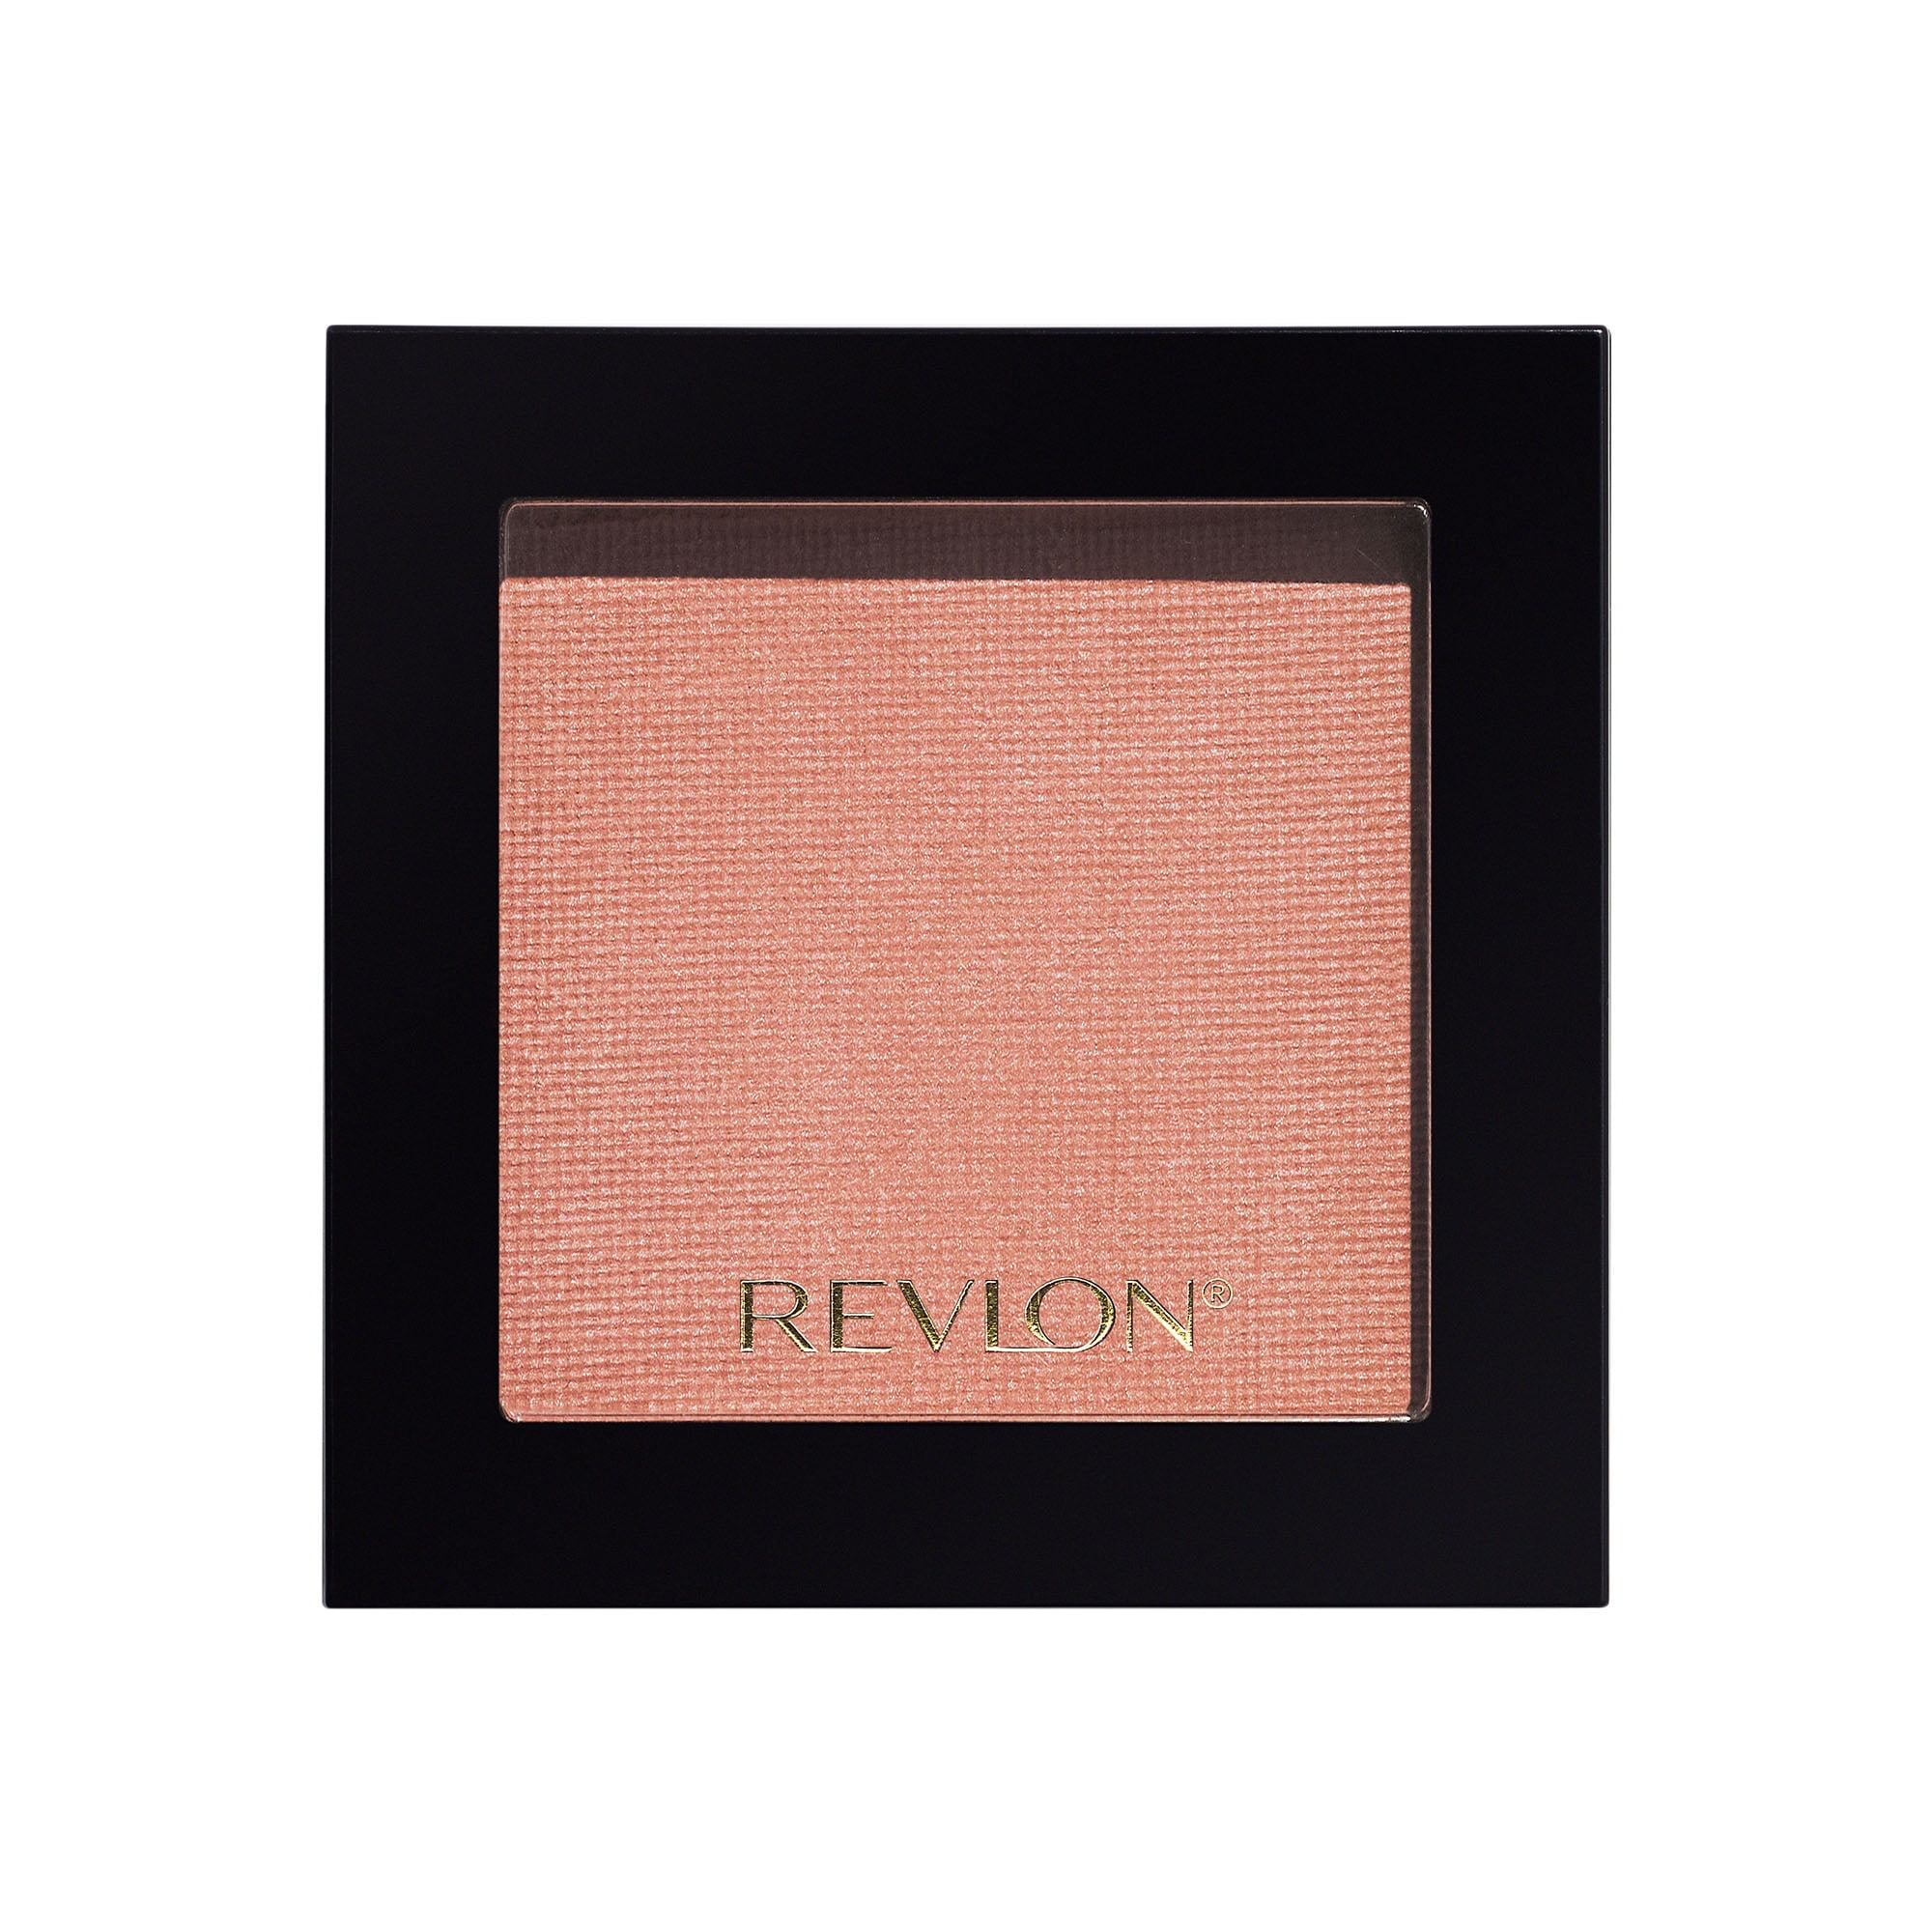 Revlon Powder Blush, 006 Naughty Nude, 0.18 oz